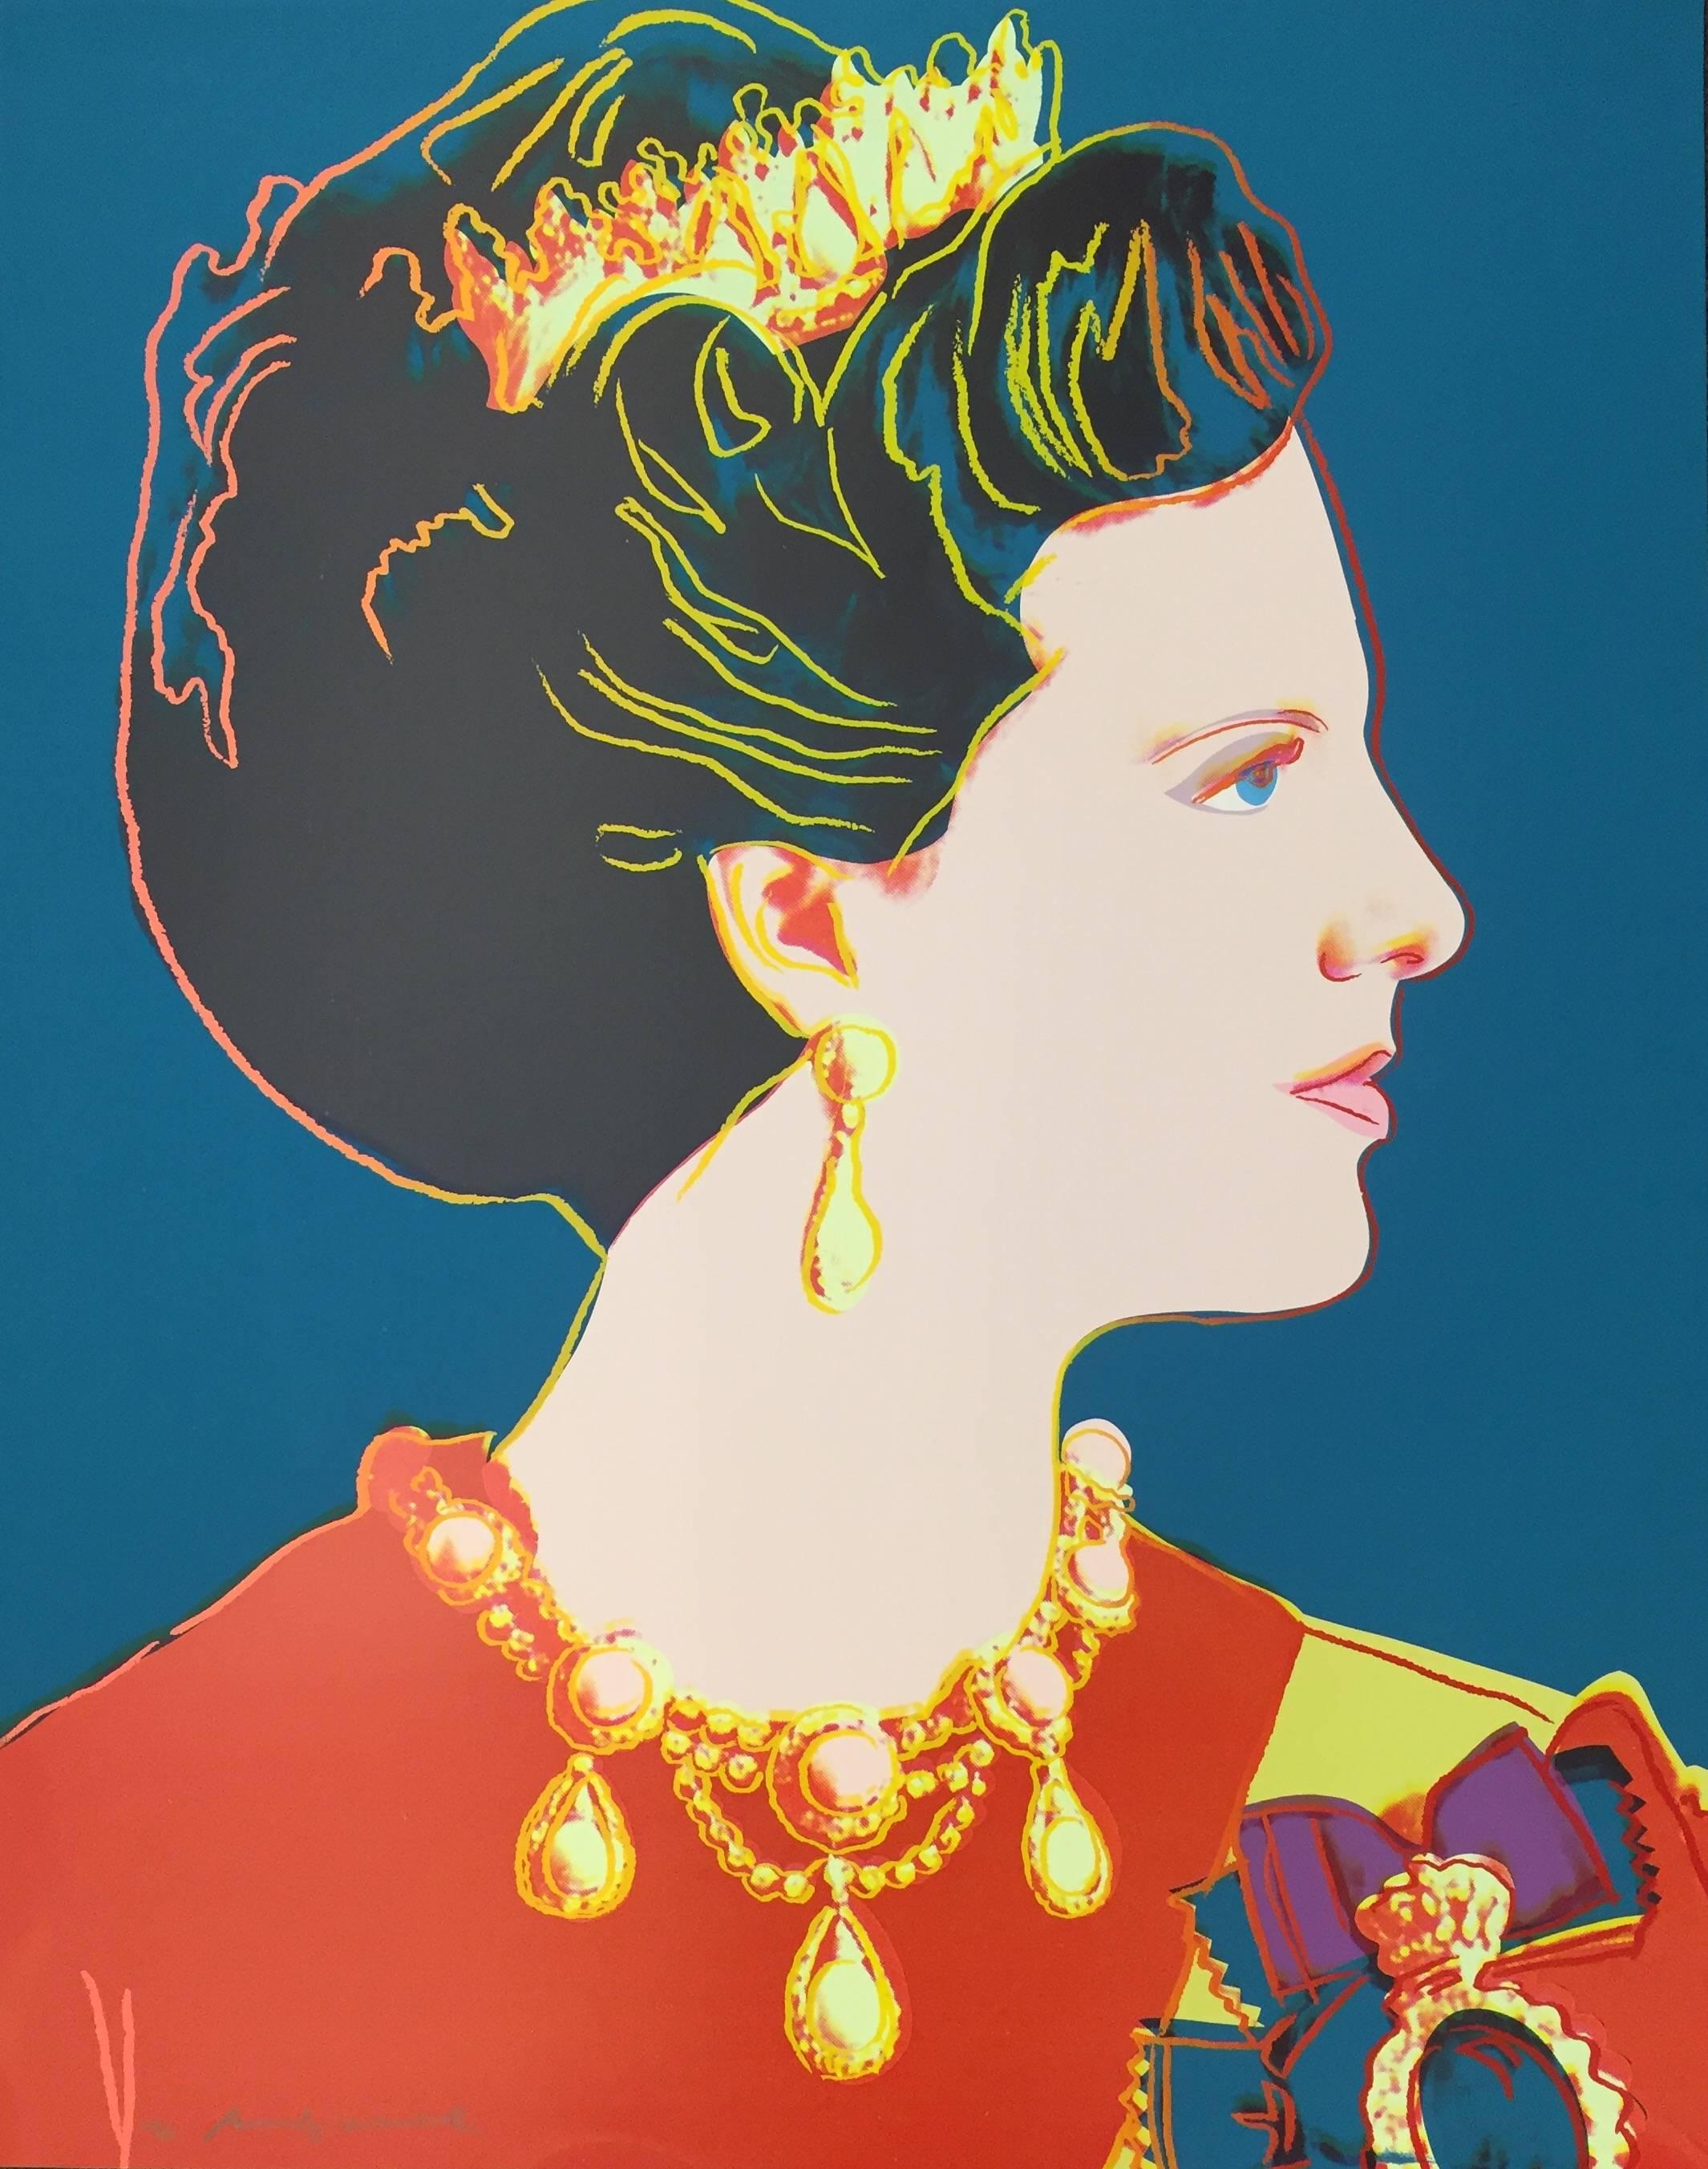 Andy Warhol Portrait Print - Queen Margrethe II of Denmark (FS II.343)